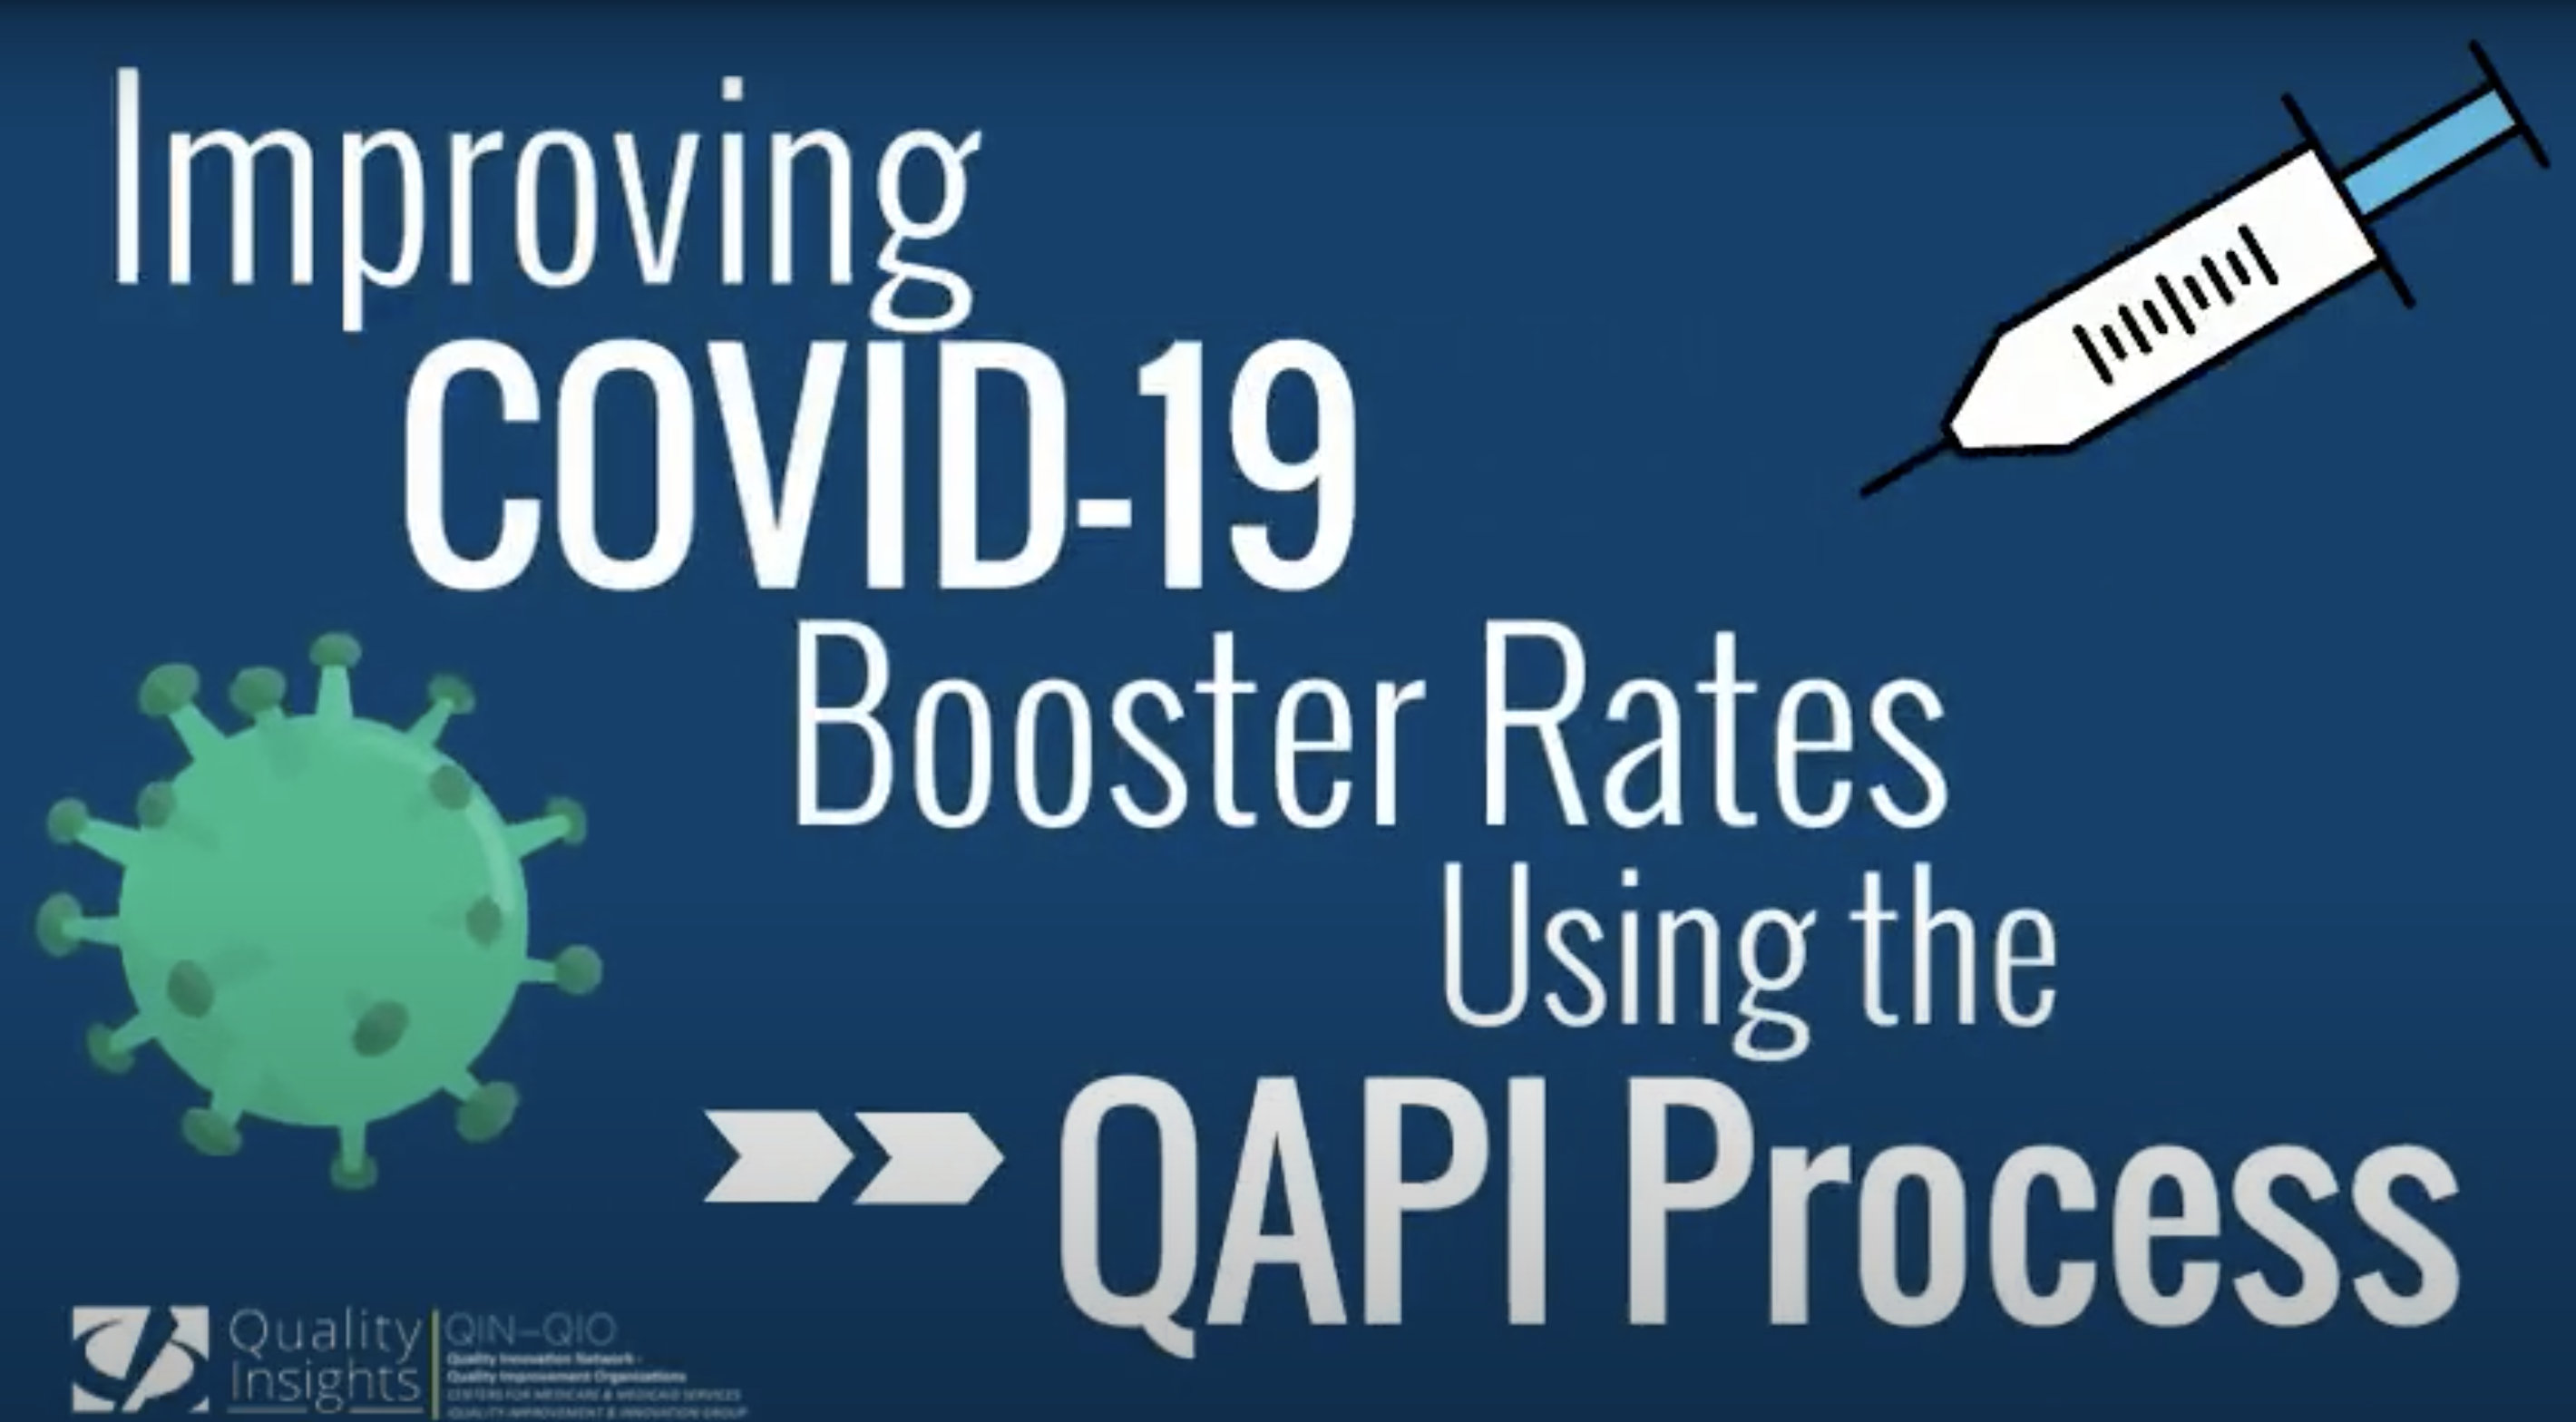 Covid-19 QAPI Process Image